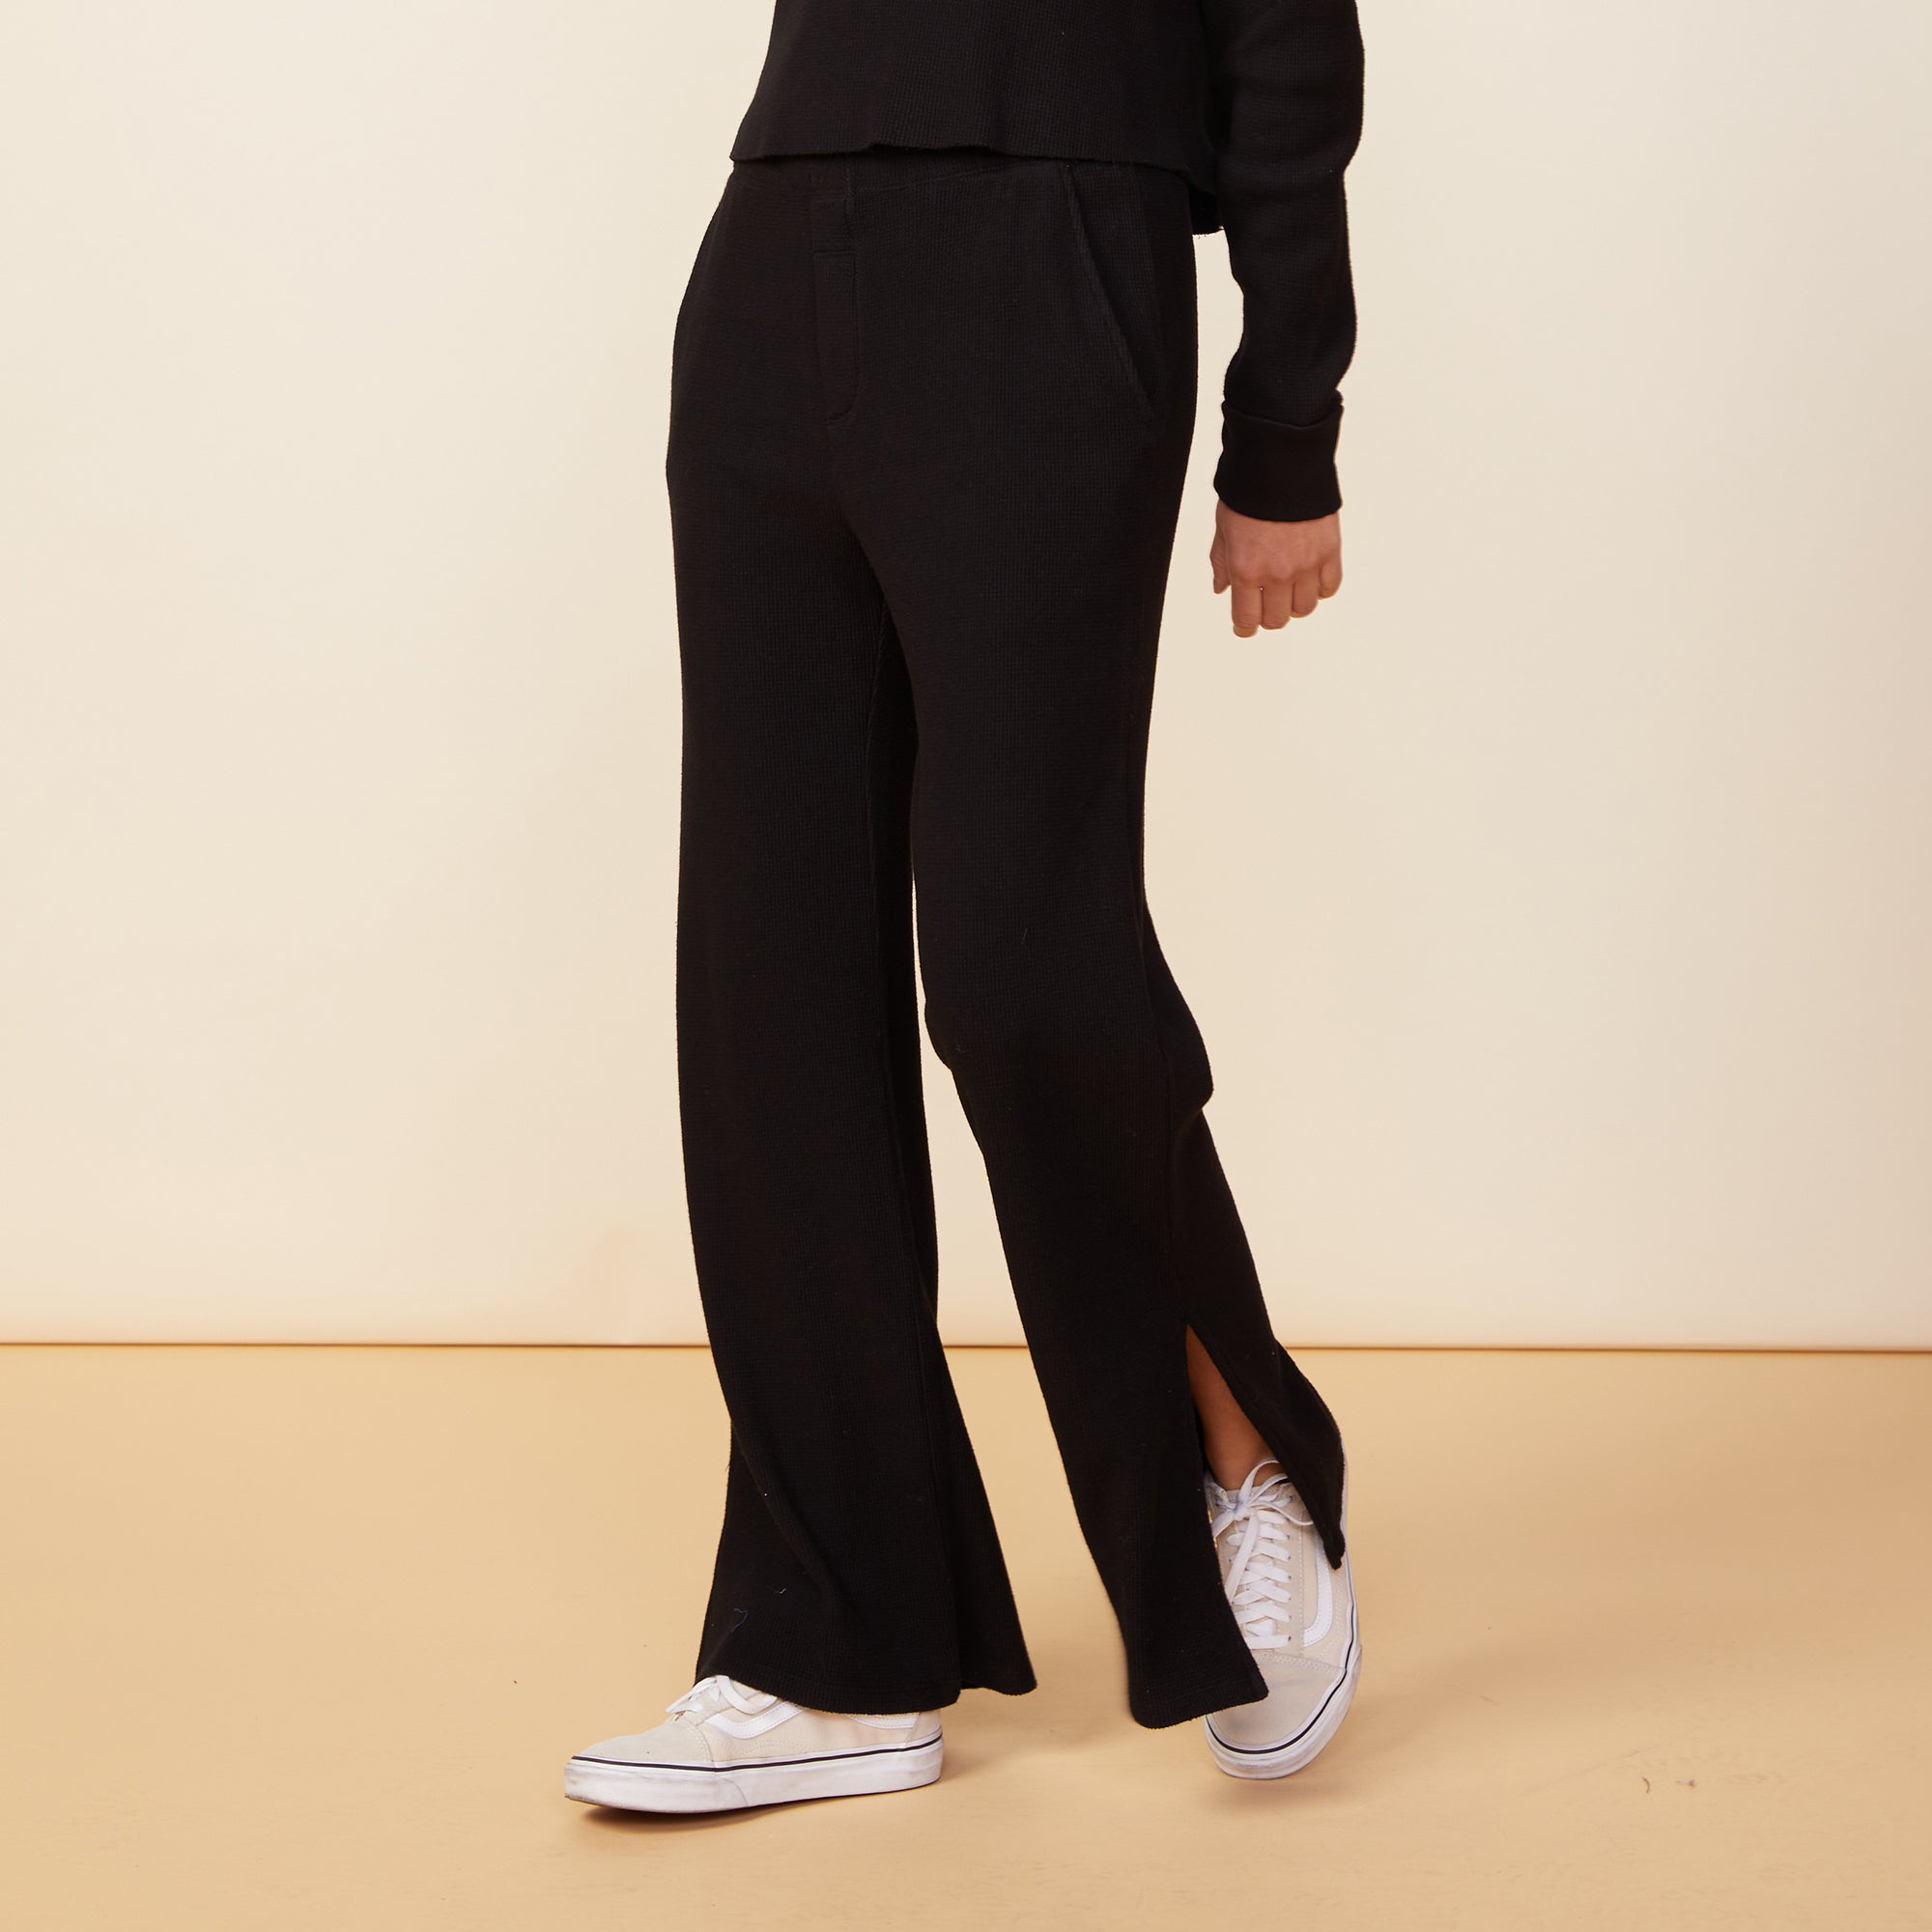 Panta Orbis Hydroscud® Thermal Trousers Black Store Online